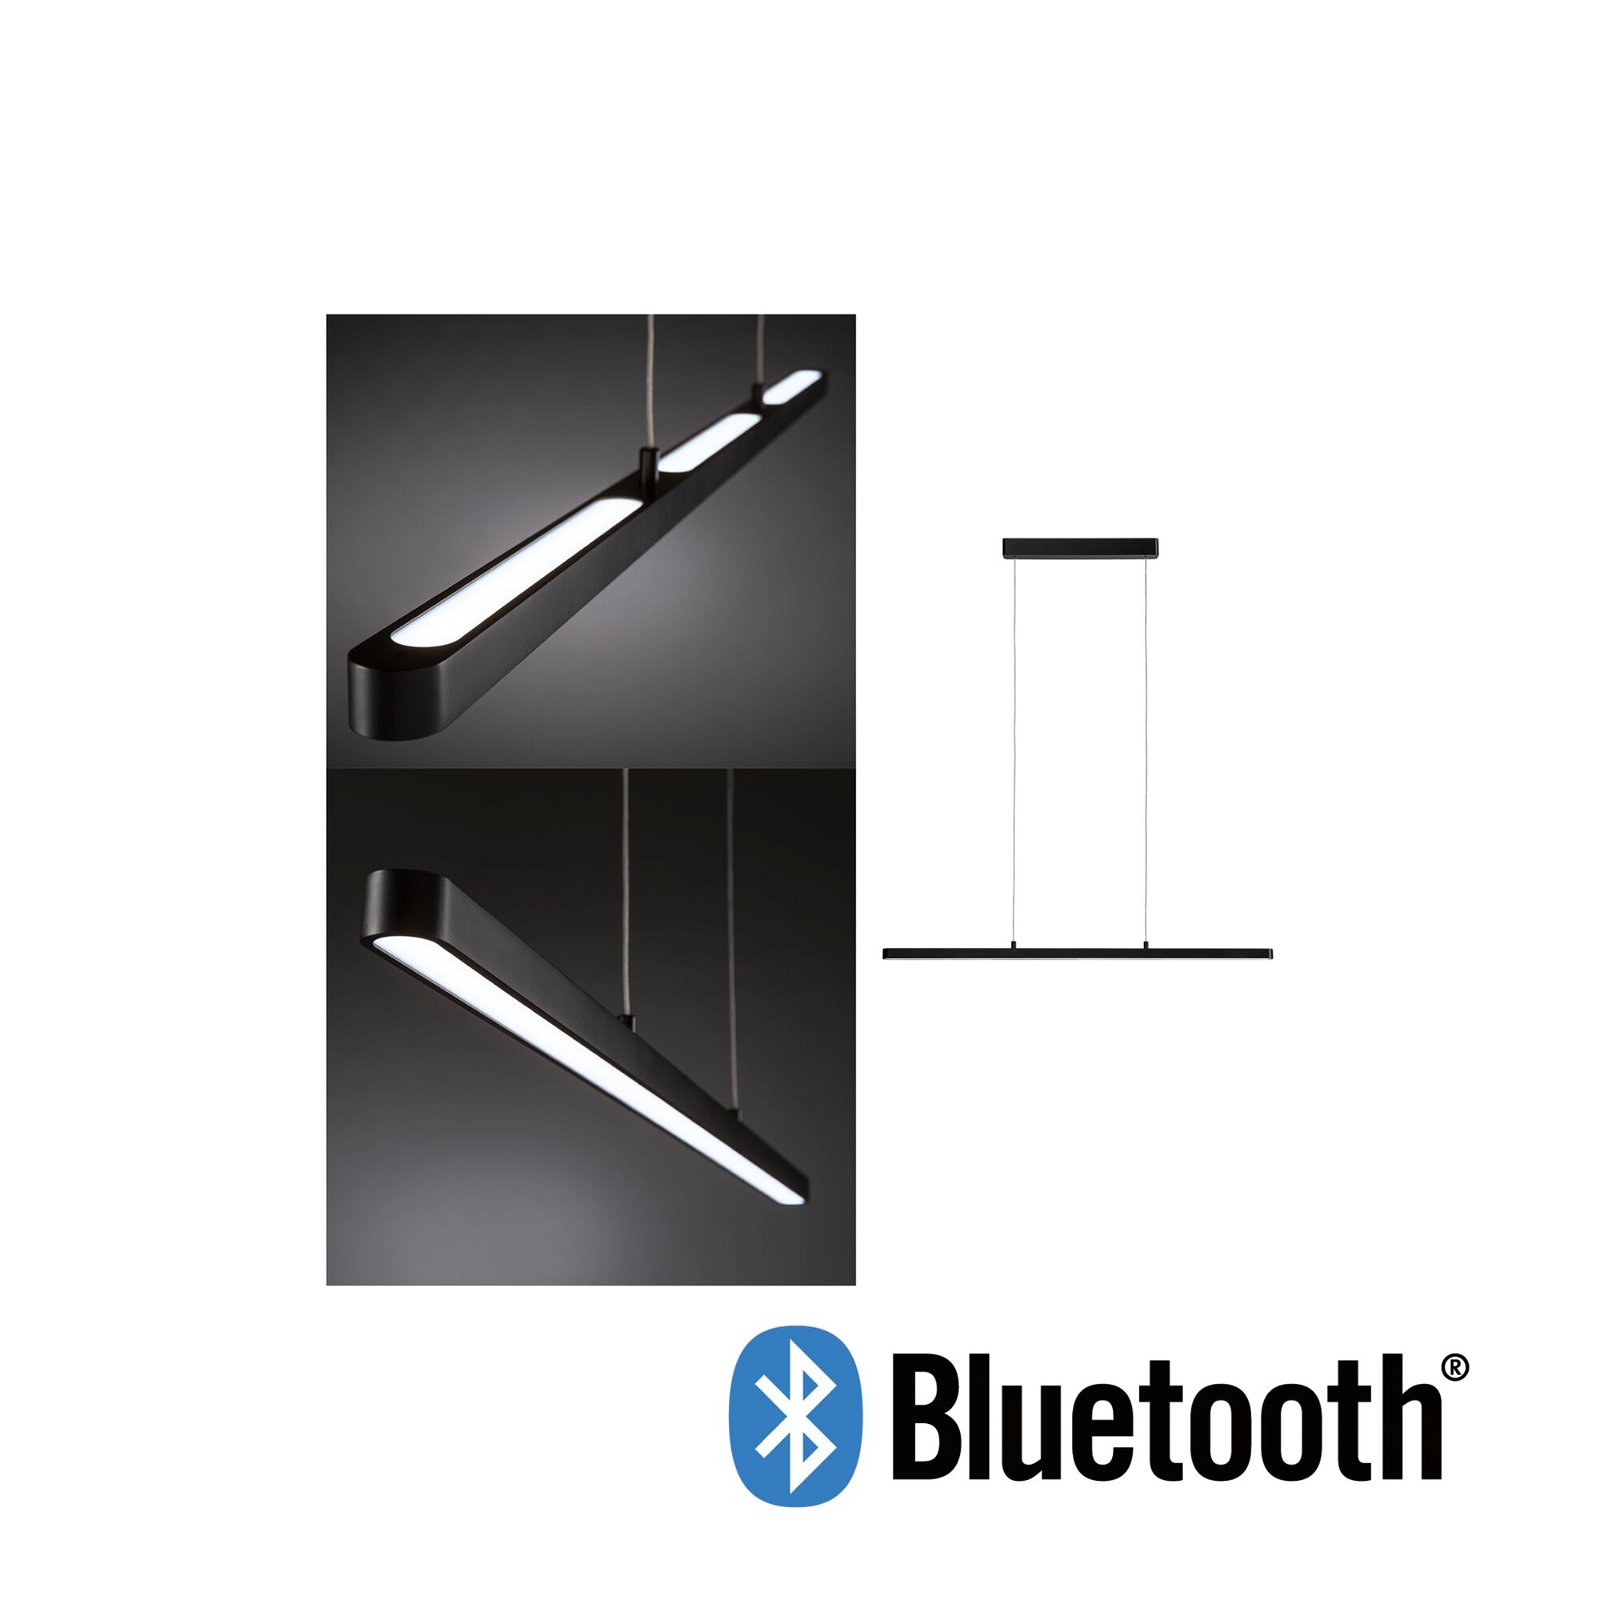 LED-hanglamp Smart Home Bluetooth Lento Tunable White 1700lm 43W Zwart dimbaar